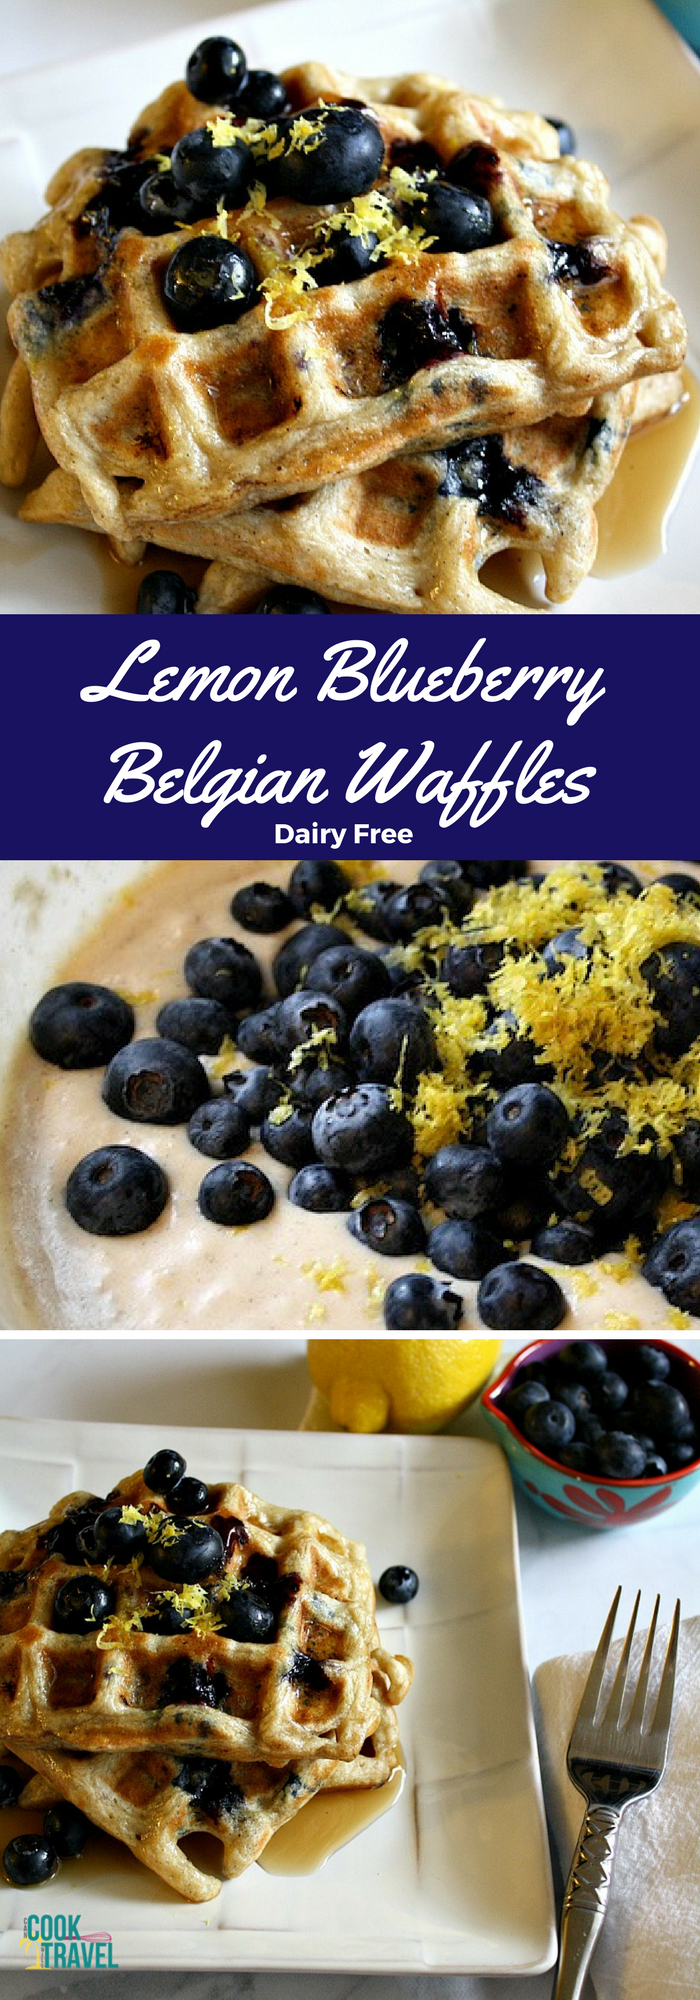 Lemon Blueberry Belgian Waffles